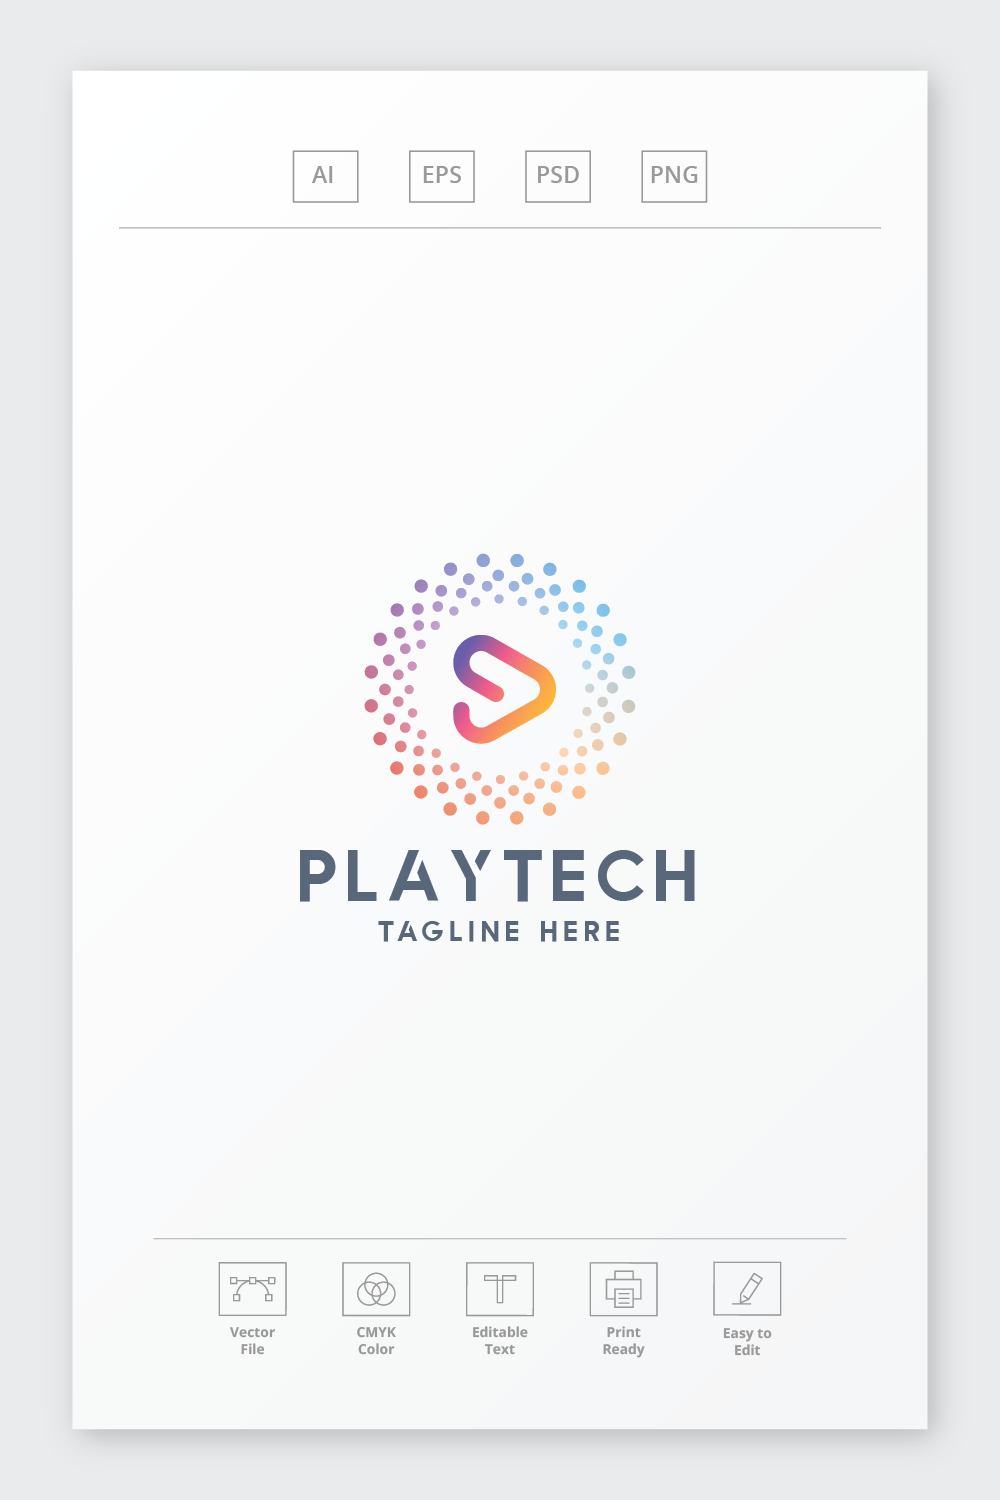 Media Play Tech Logo pinterest preview image.